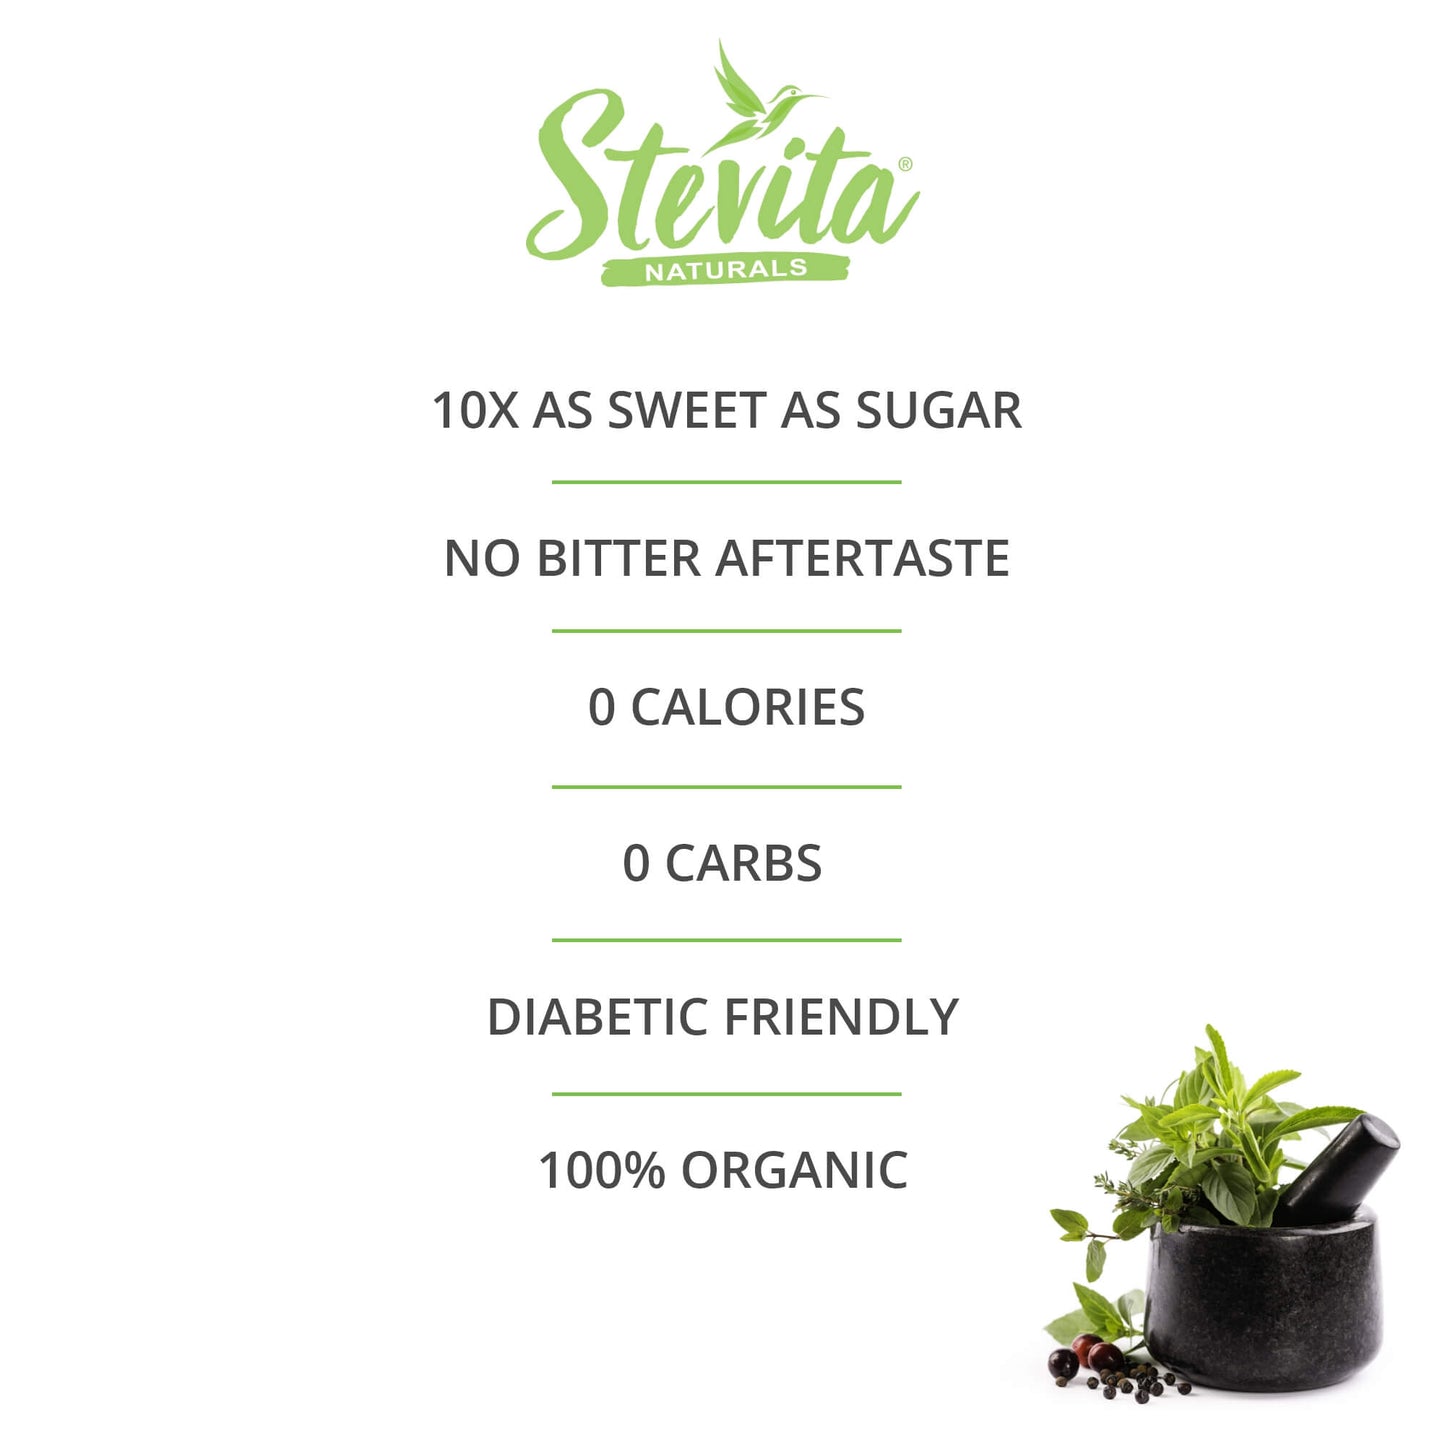 Stevita Organic Spoonable - 1000 packets bulk